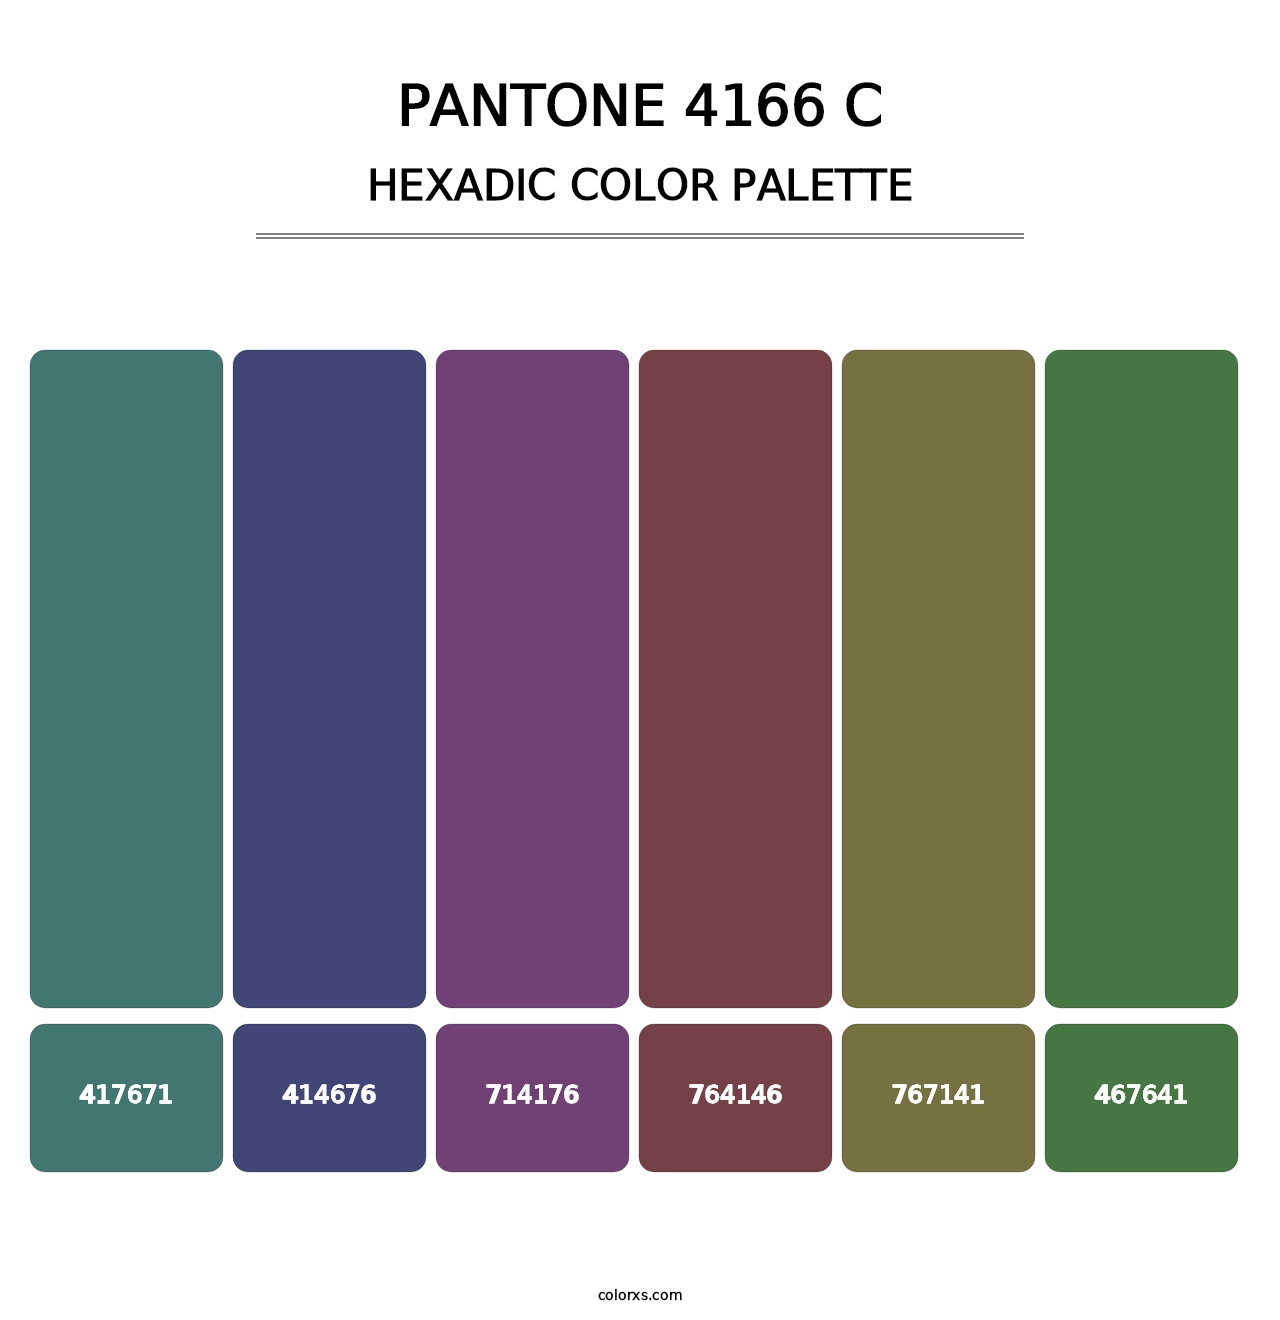 PANTONE 4166 C - Hexadic Color Palette